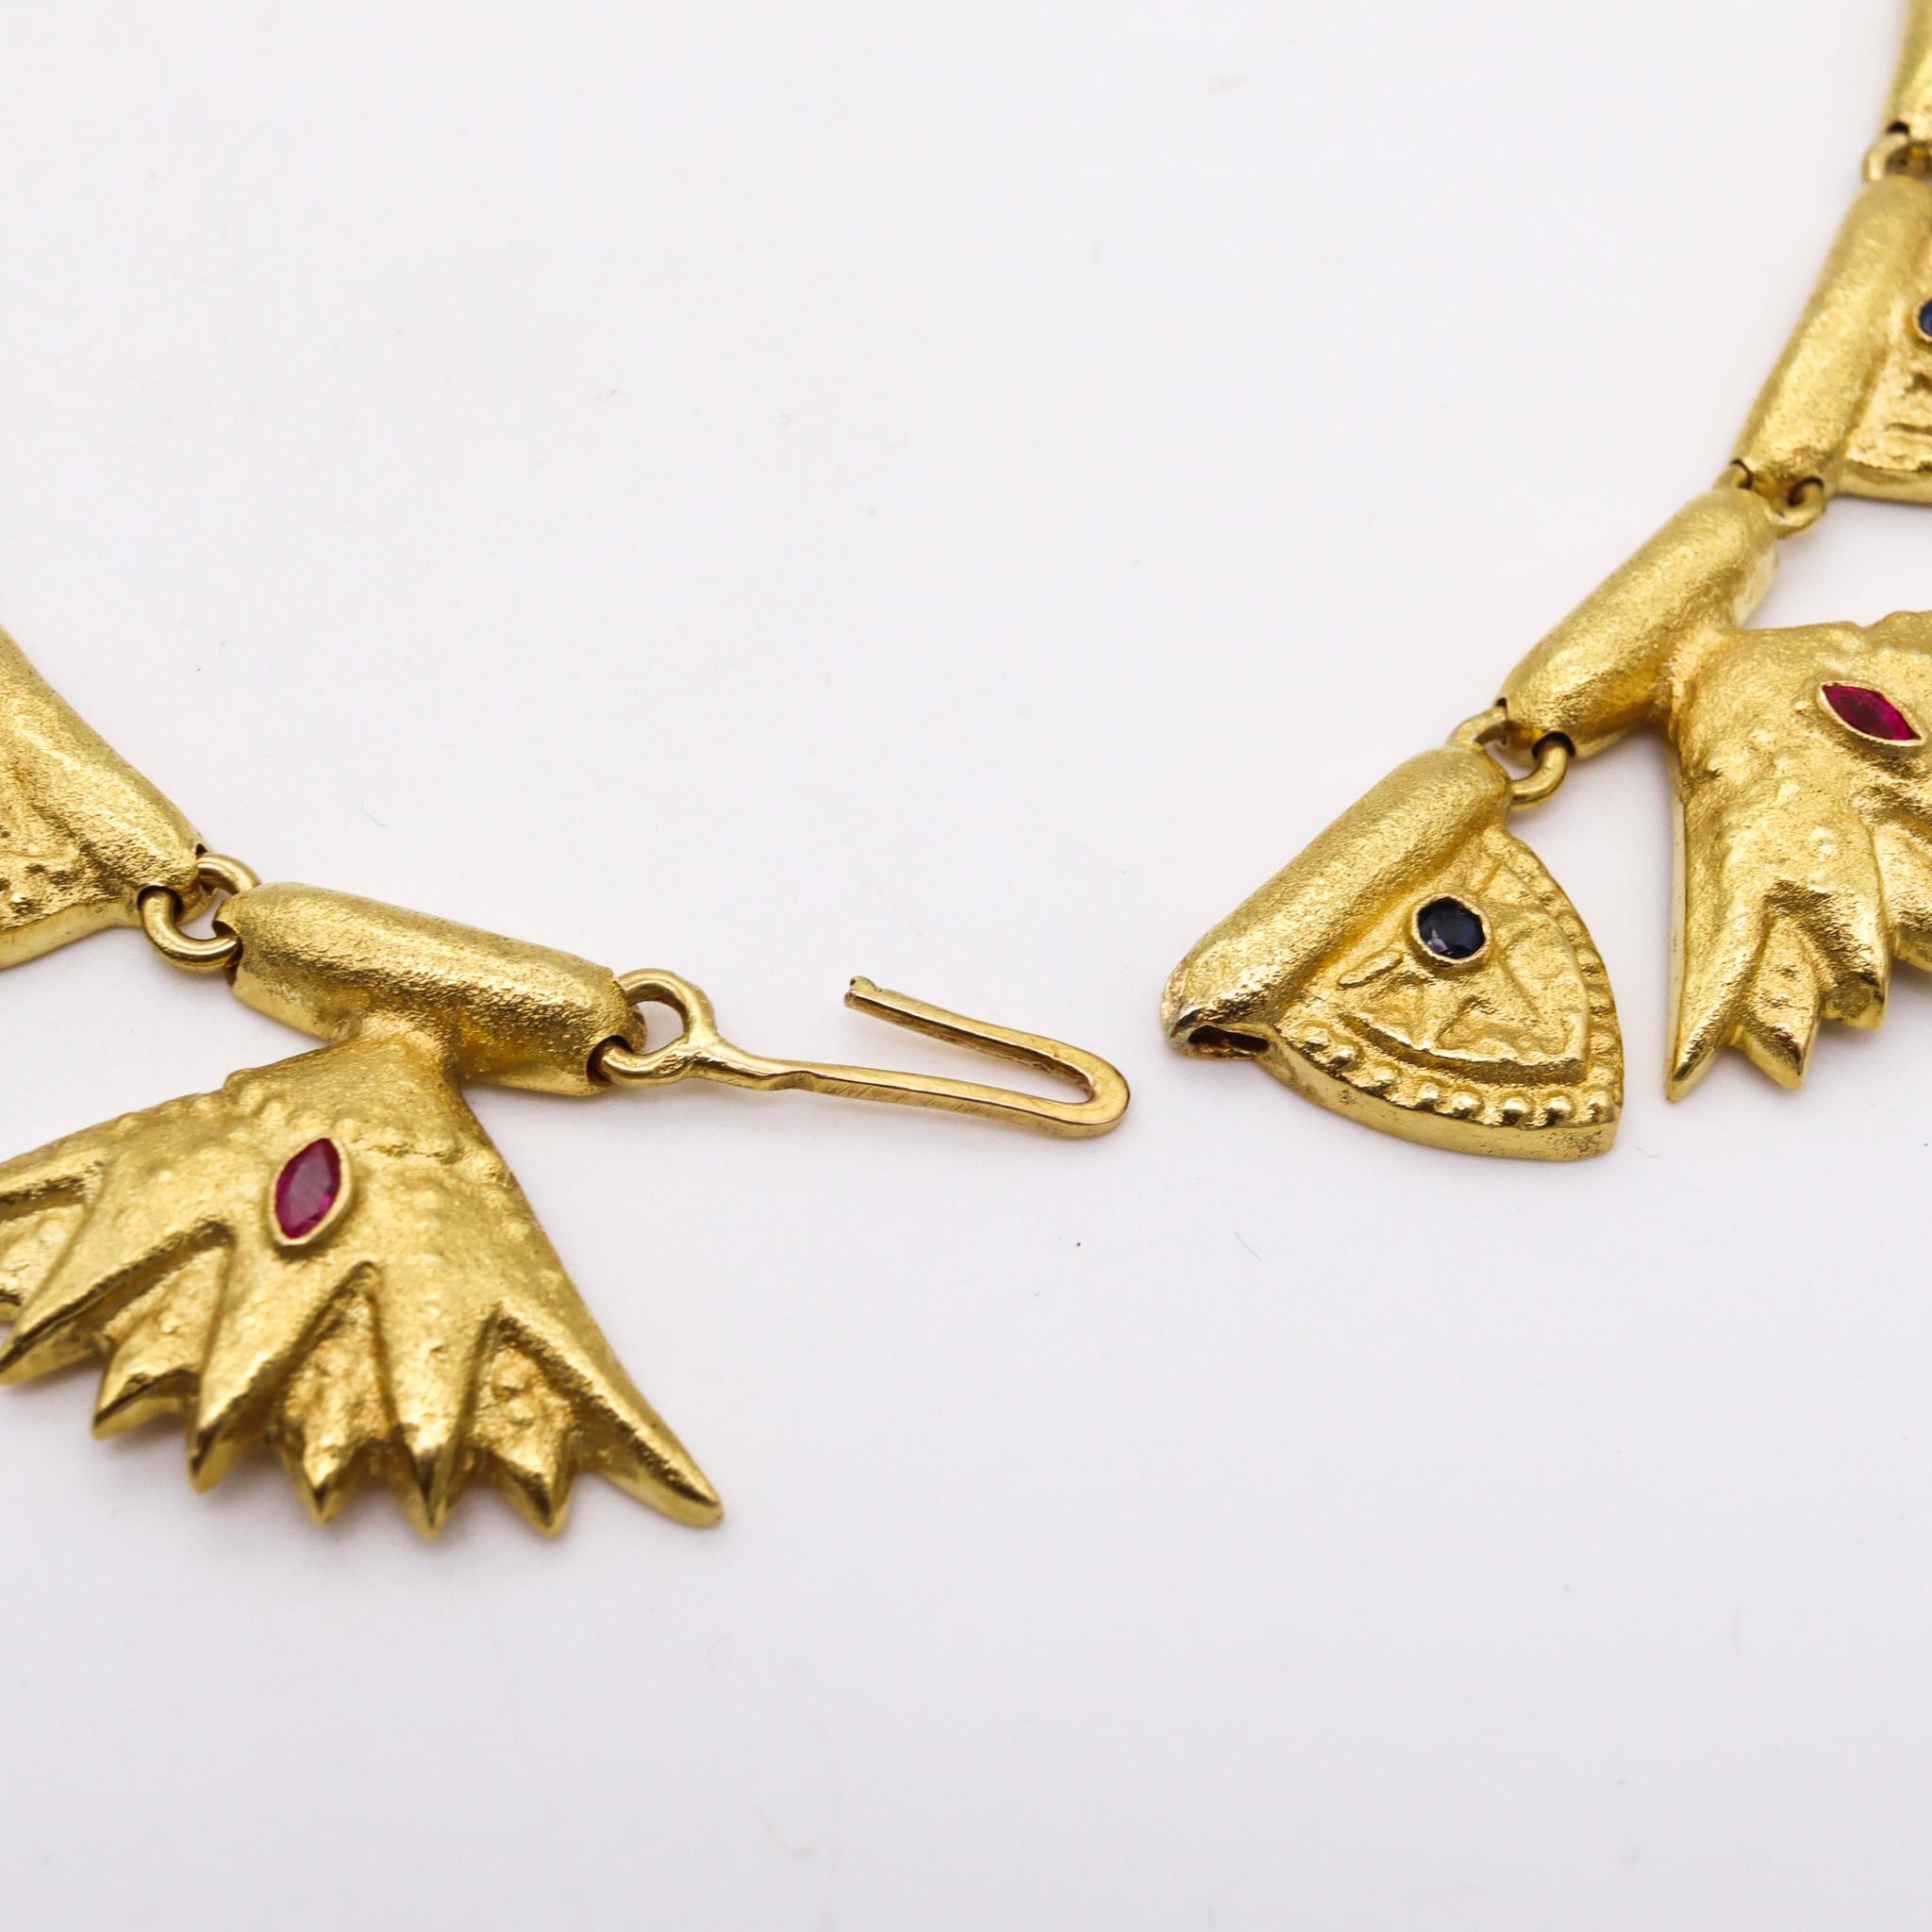 Arrigo & Olga Finzi 1960 Milan Necklace Earrings Set in 18k Gold with Gemstones In Excellent Condition For Sale In Miami, FL